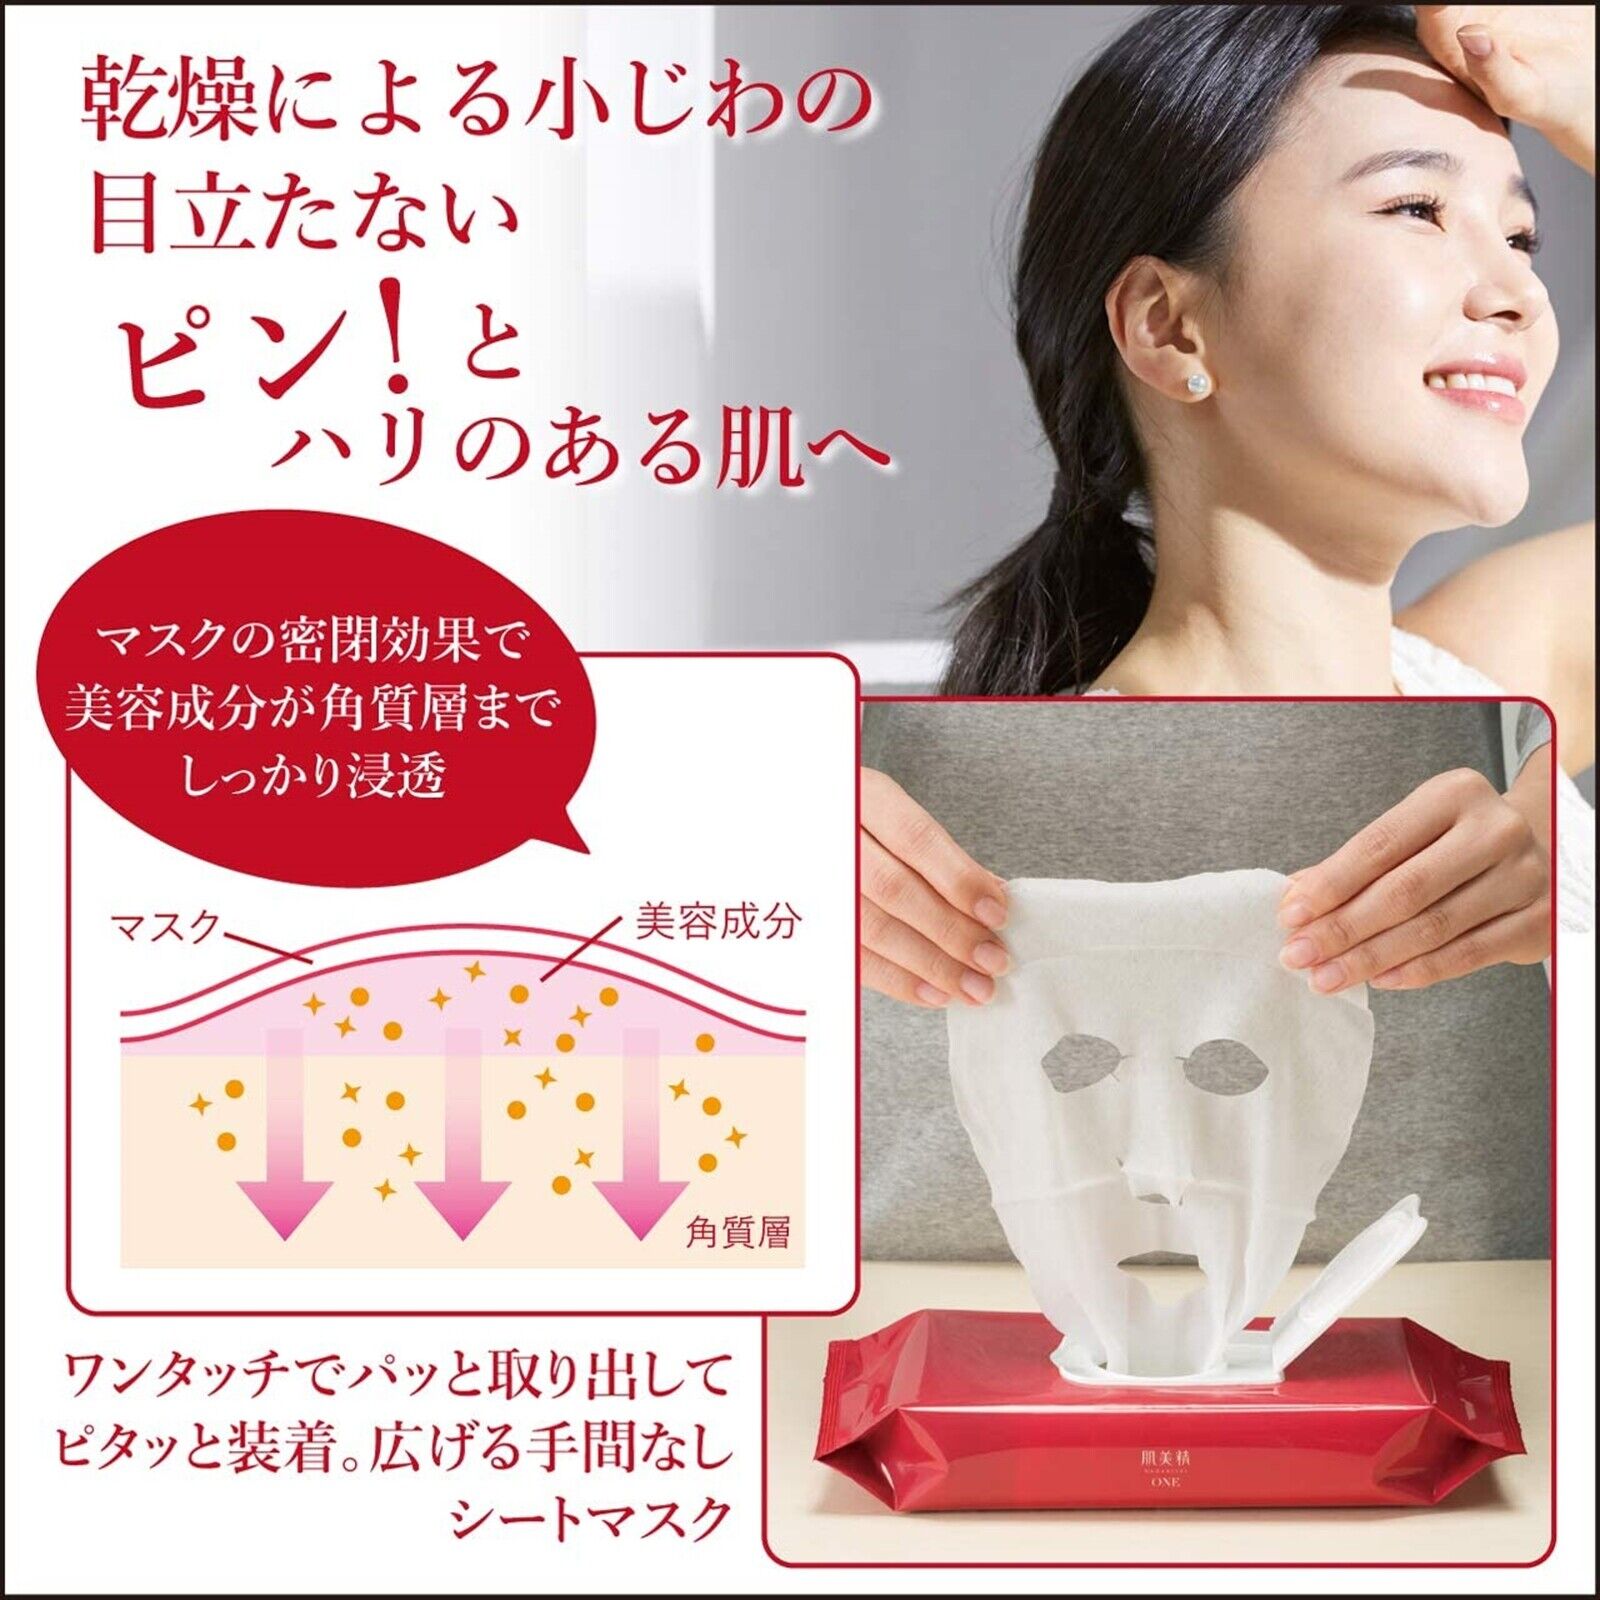 Kracie Hadabisei Wrinkle Care Face Mask - Kracie | Kiokii and...